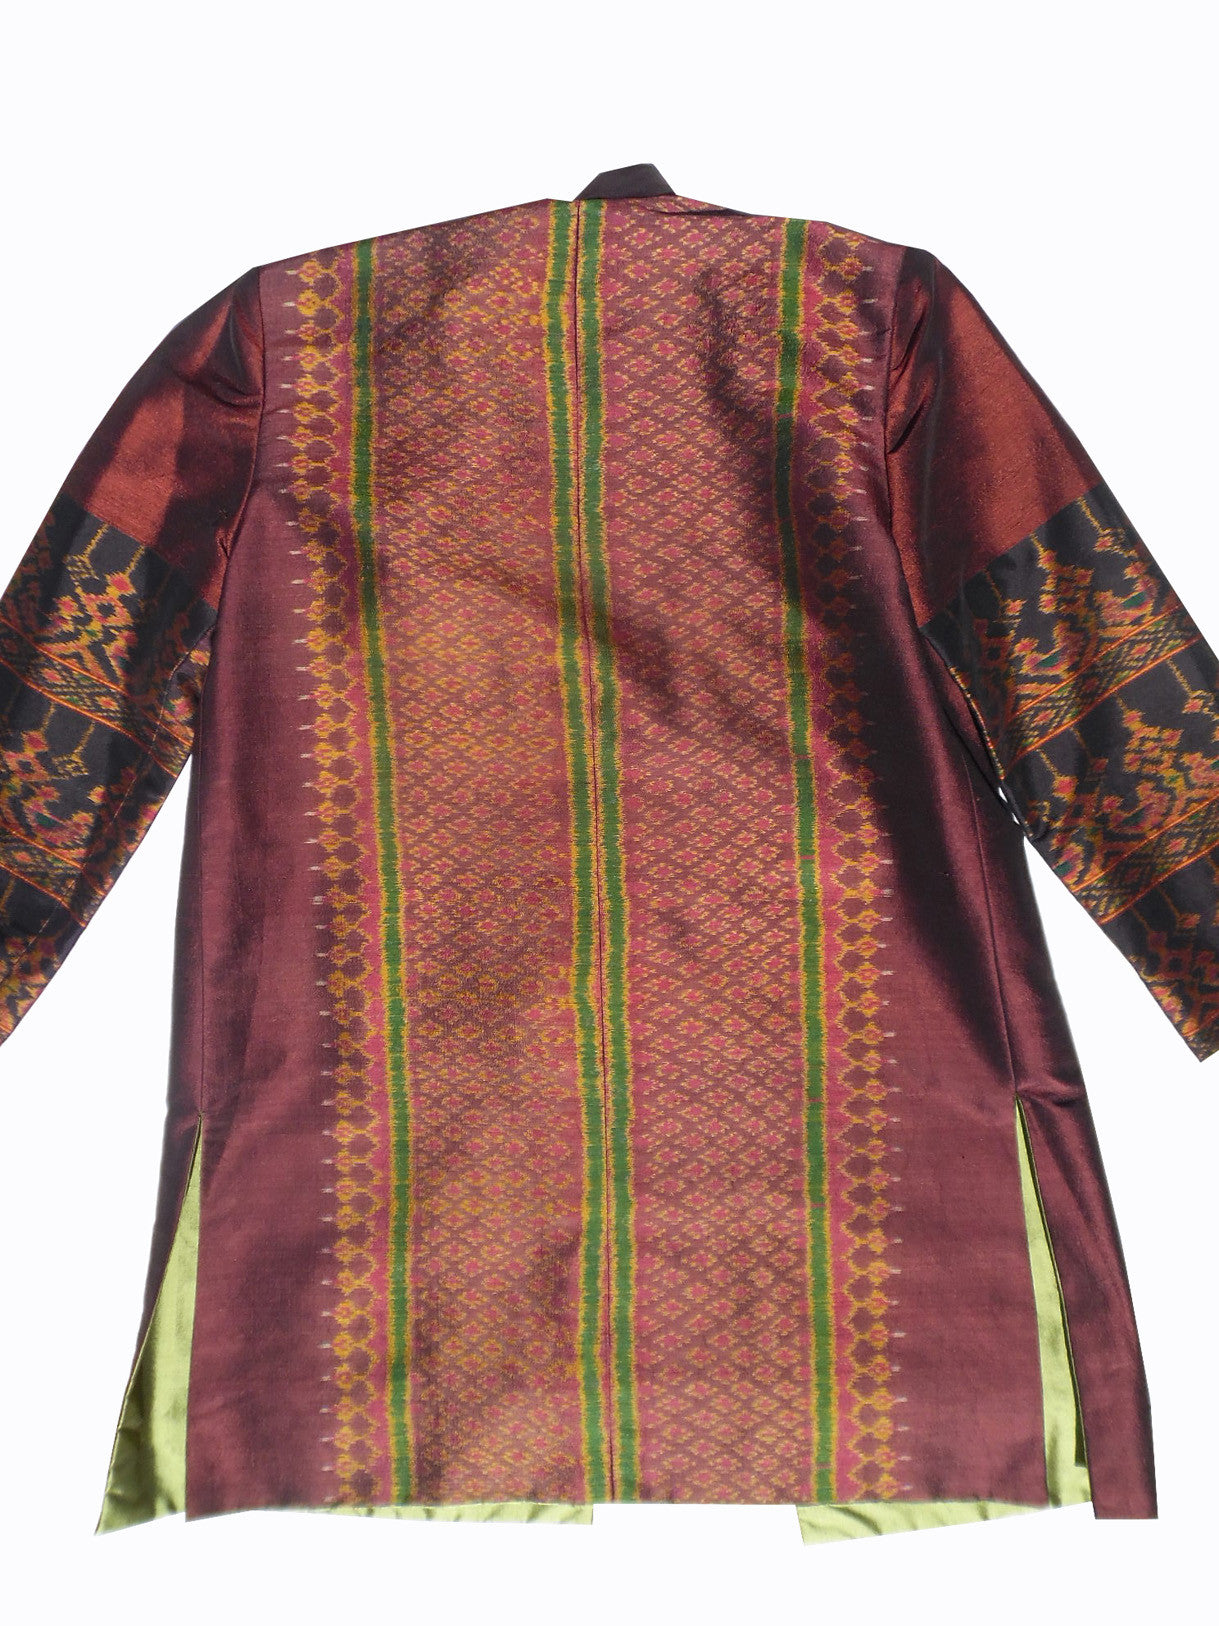 Long Mandarin Silk Ikat Evening Jacket with Lemongrass Lining